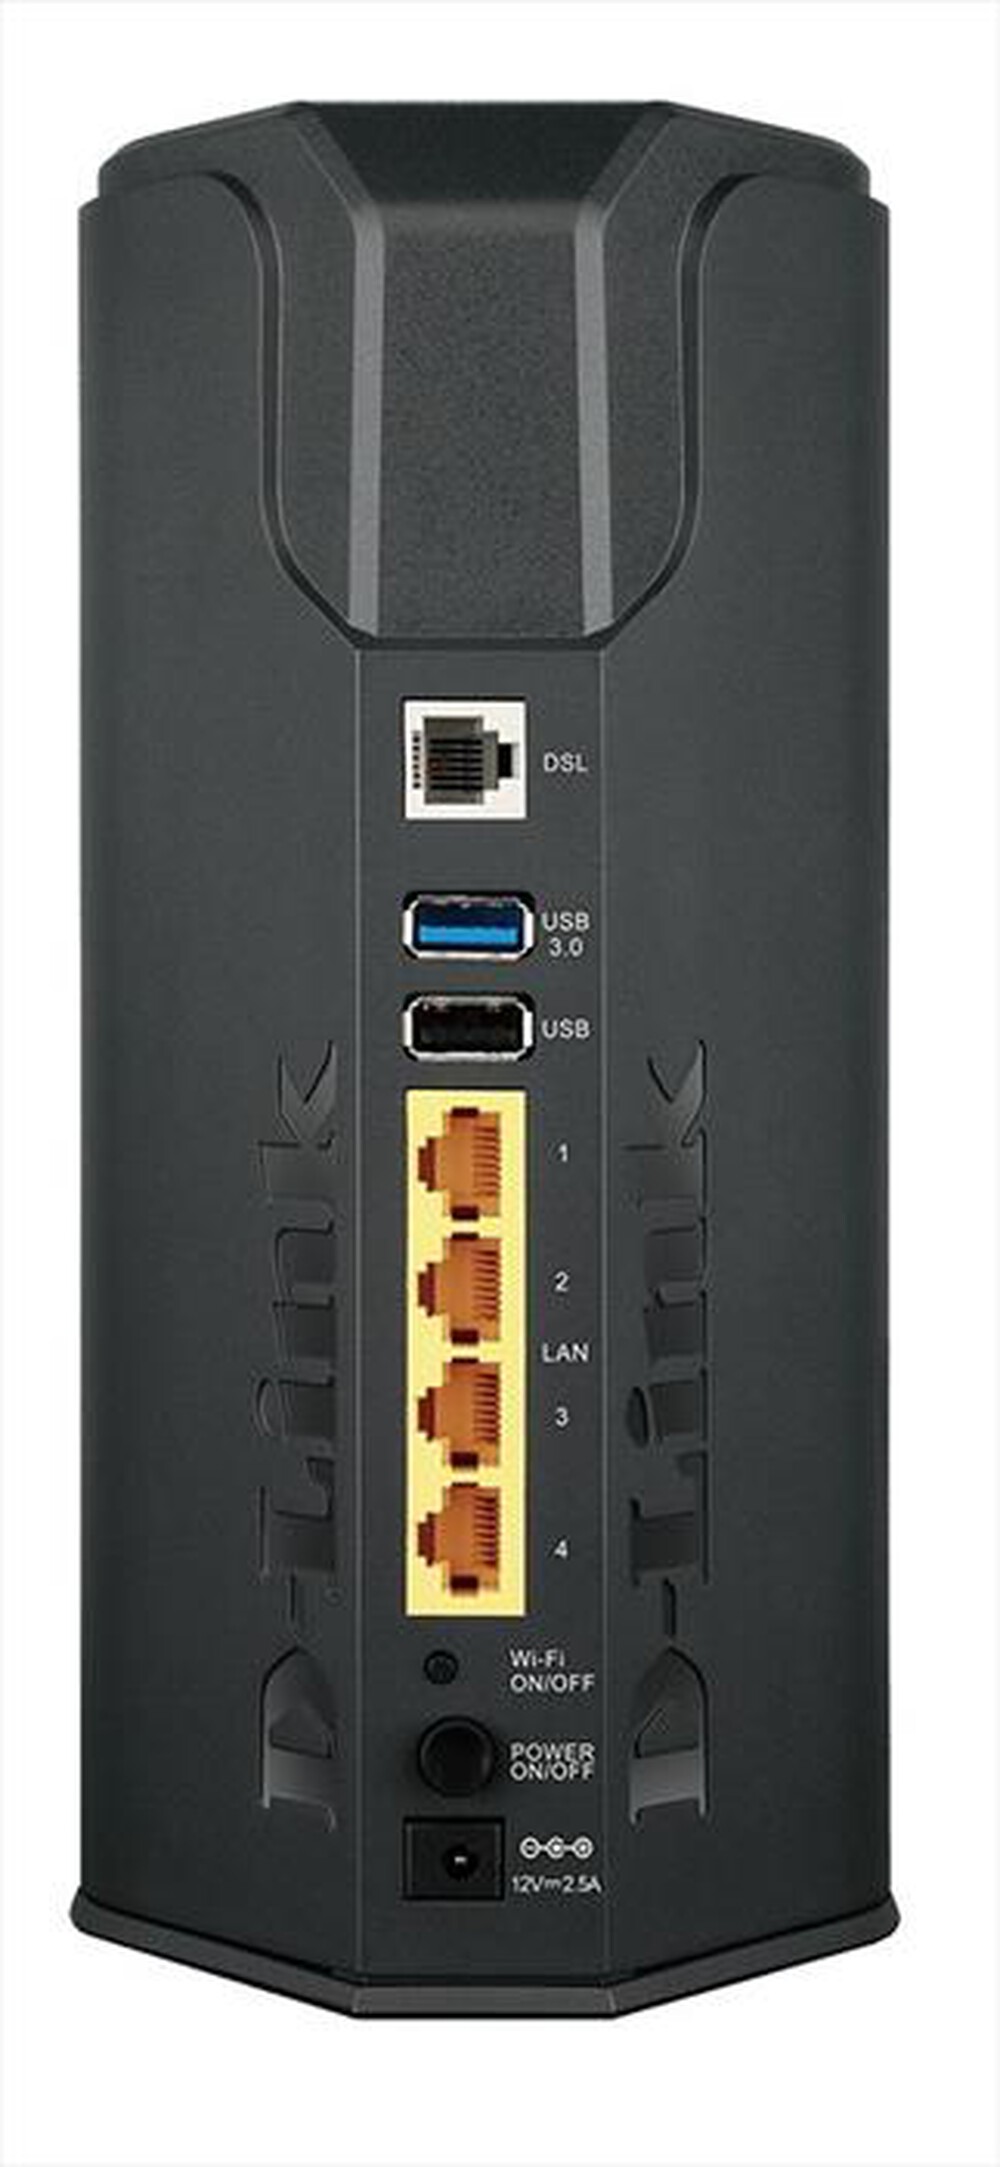 "D-LINK - DSL-3590L Modem-Router ADSL WirelessAC 1900 Mbps"